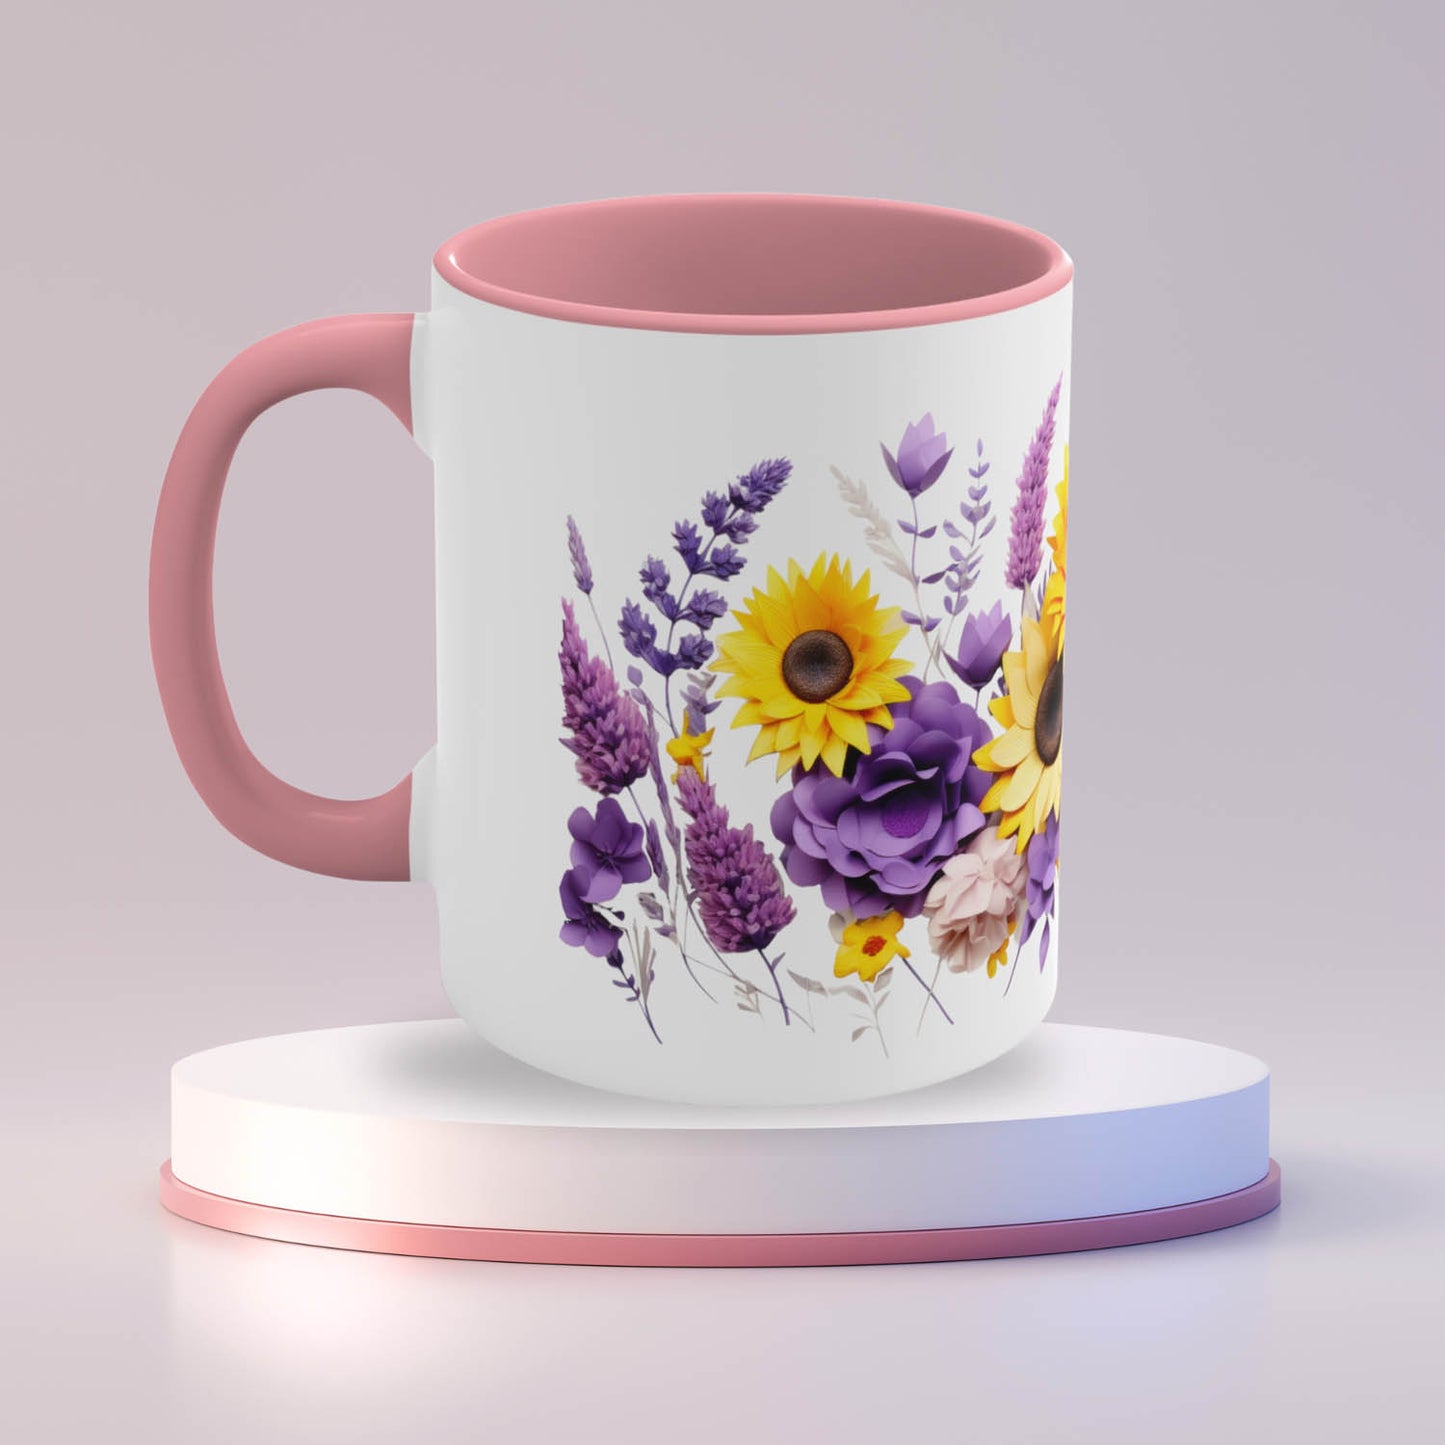 Lavender Wildflowers Mug